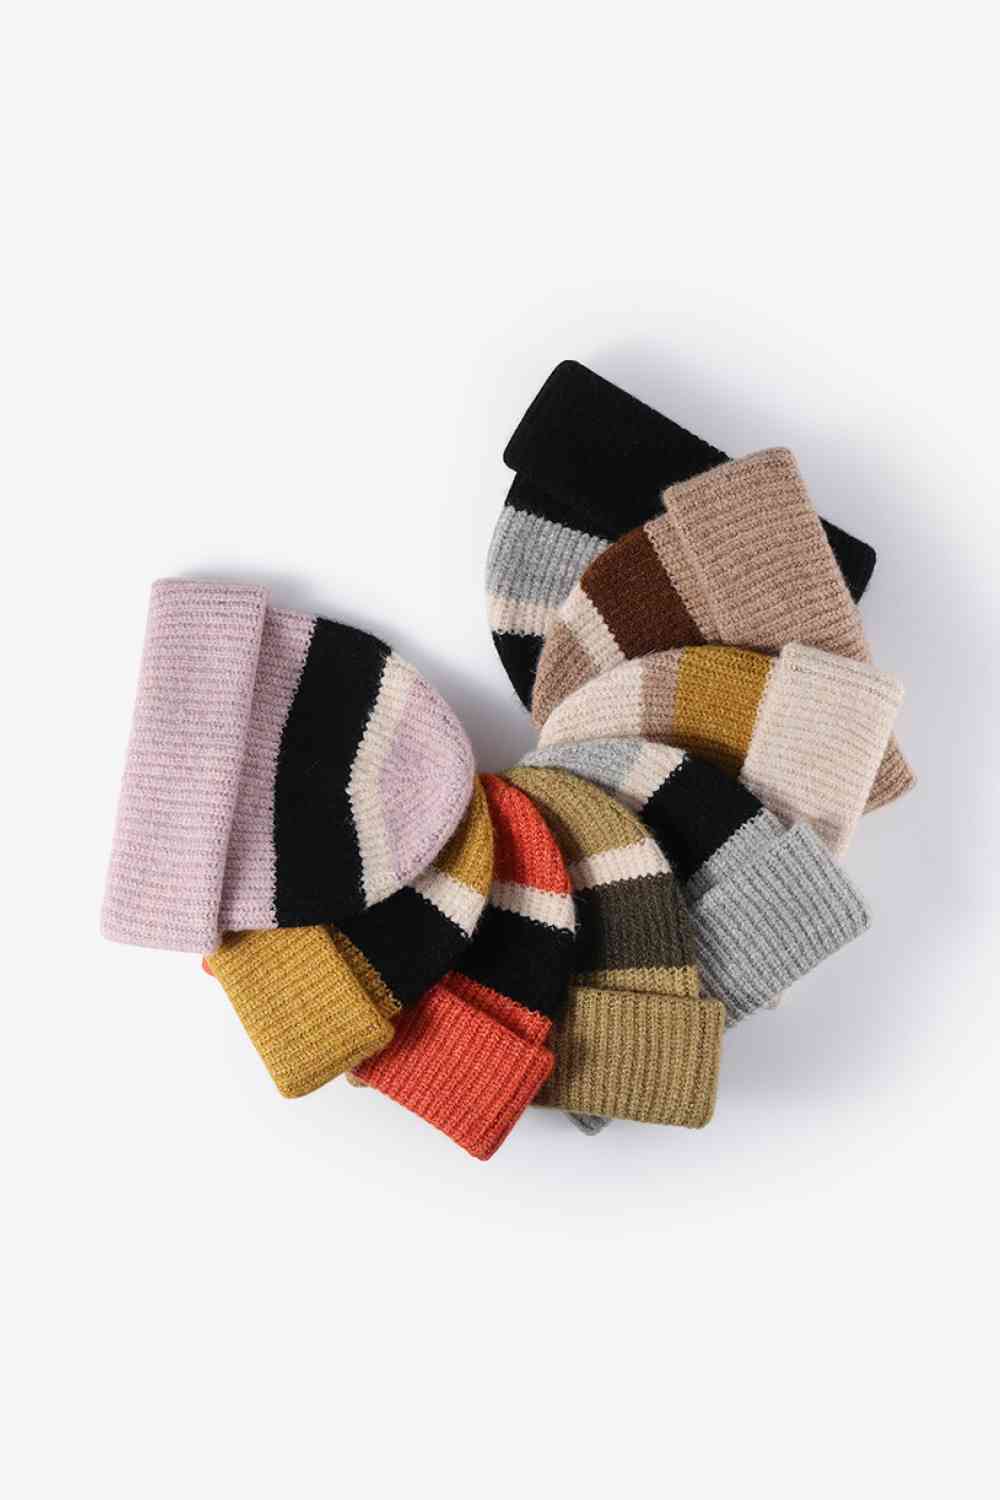 Tricolor Cuffed Knit Beanie